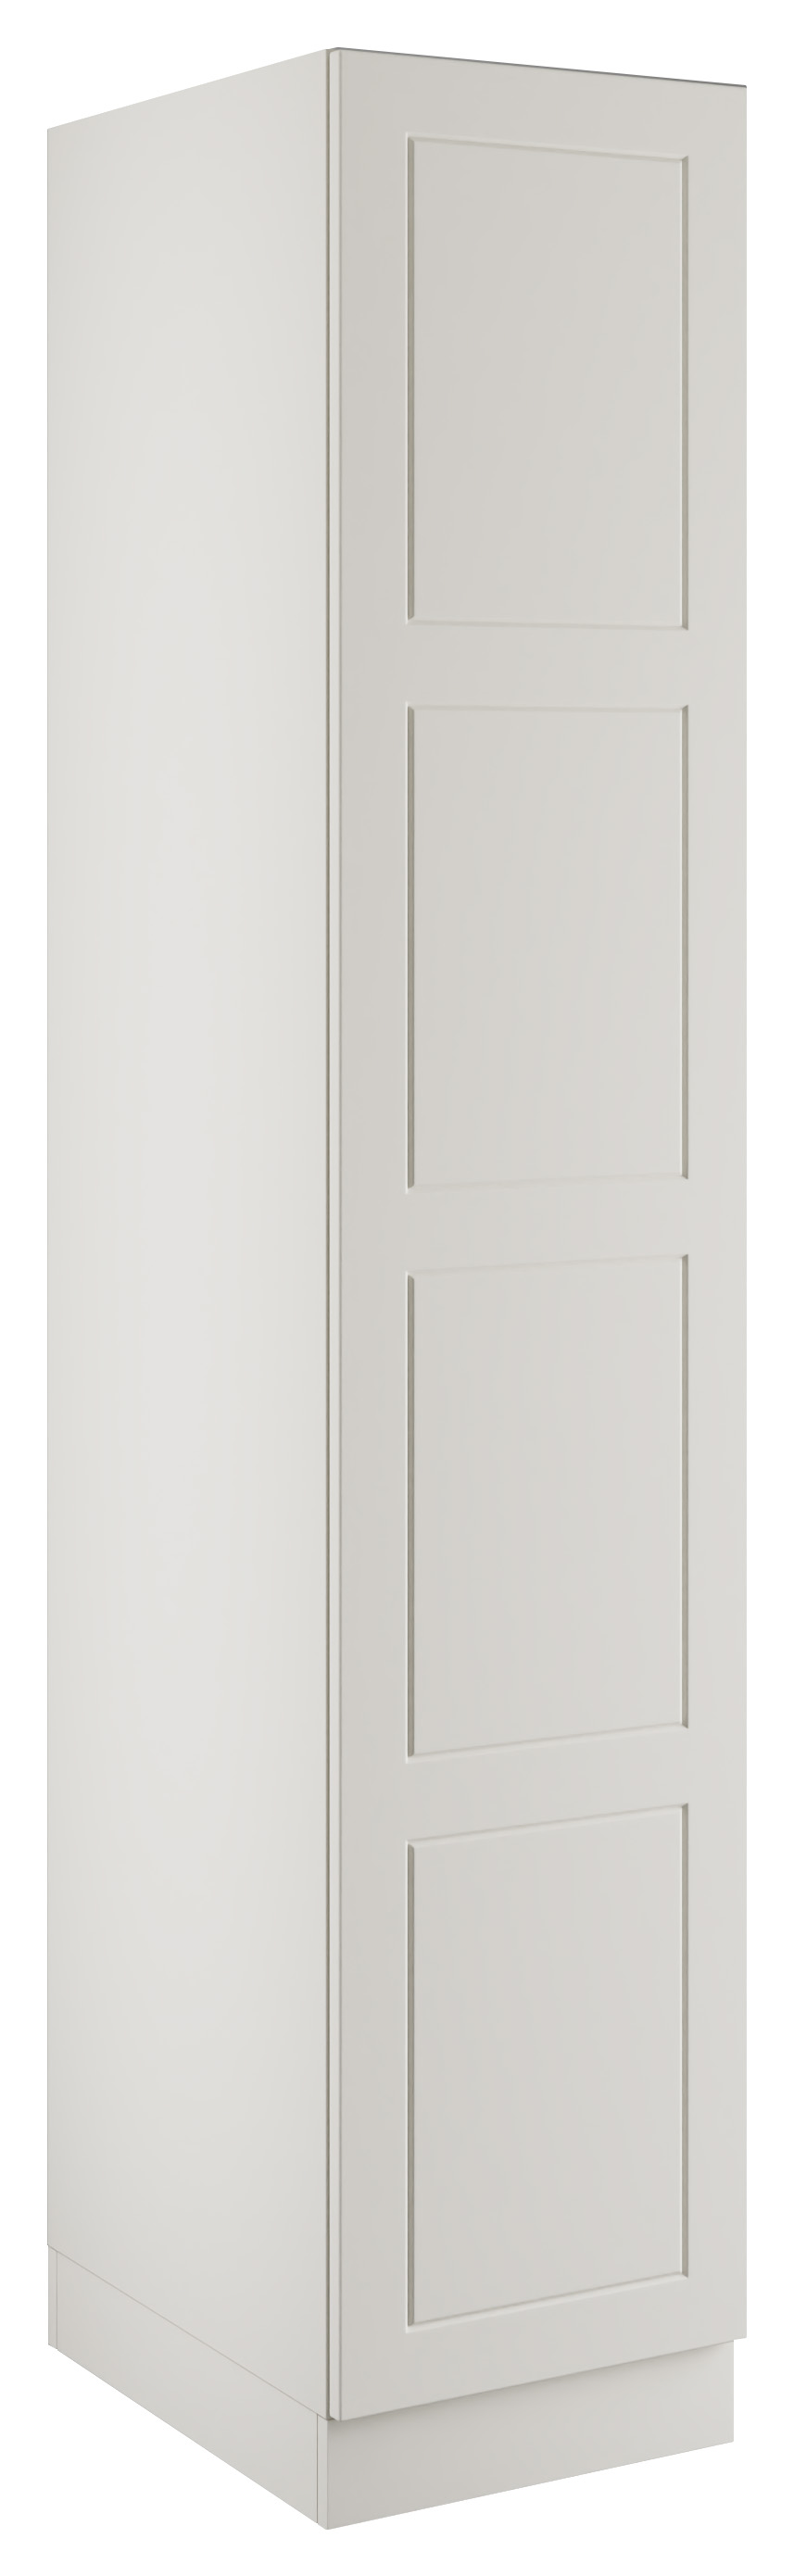 Bramham White Single Wardrobe with Double Rail - 450 x 2260 x 608mm